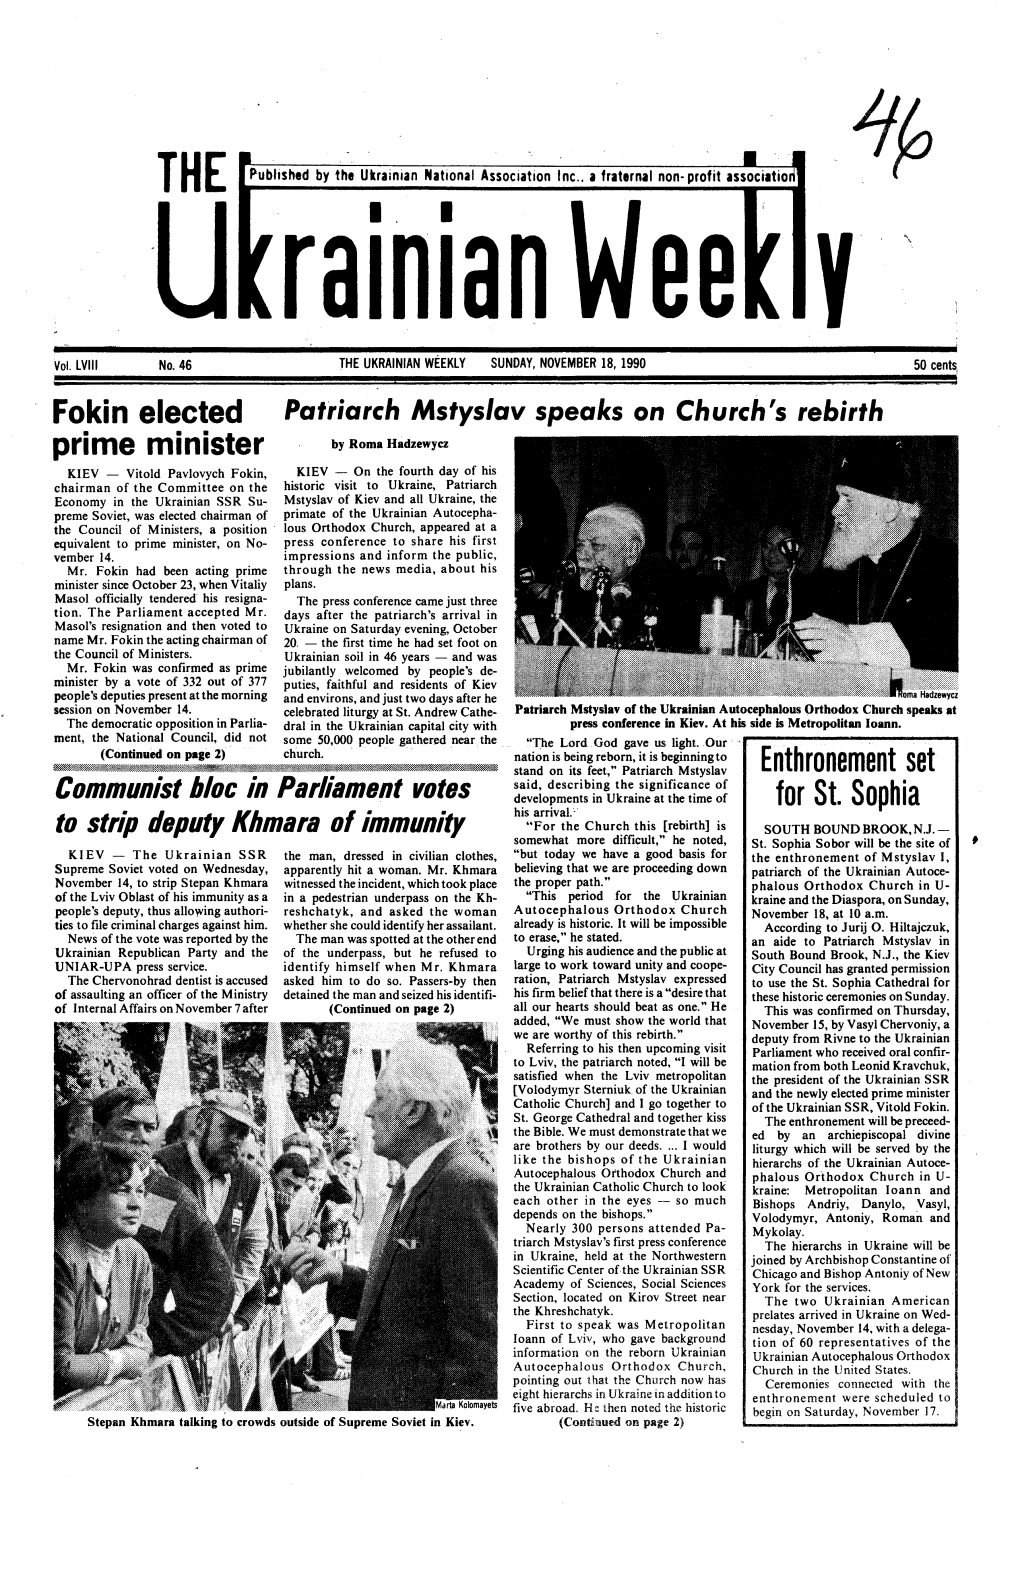 The Ukrainian Weekly 1990, No.46